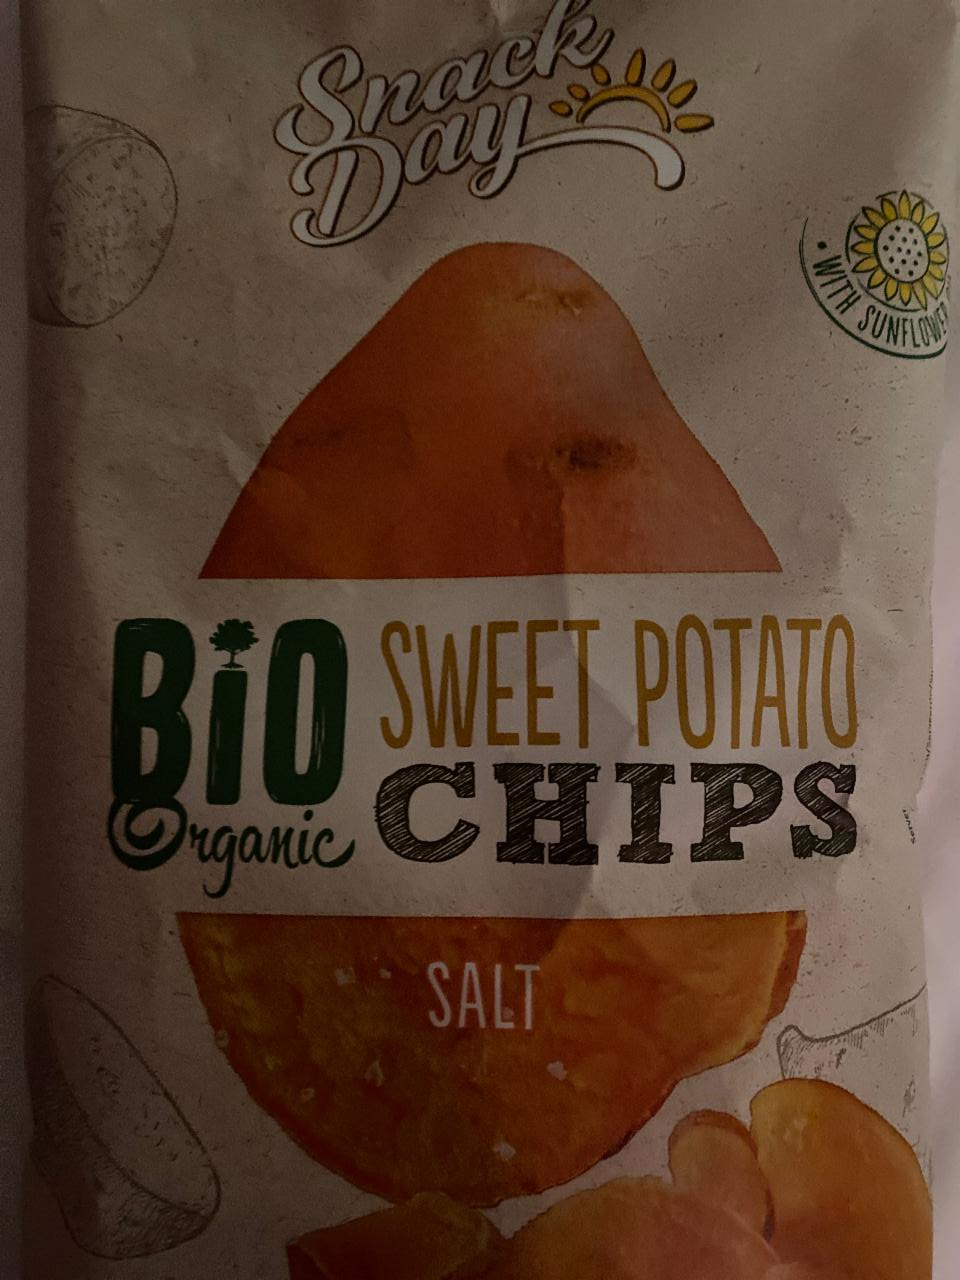 Fotografie - Sweet potato chips Snack Day